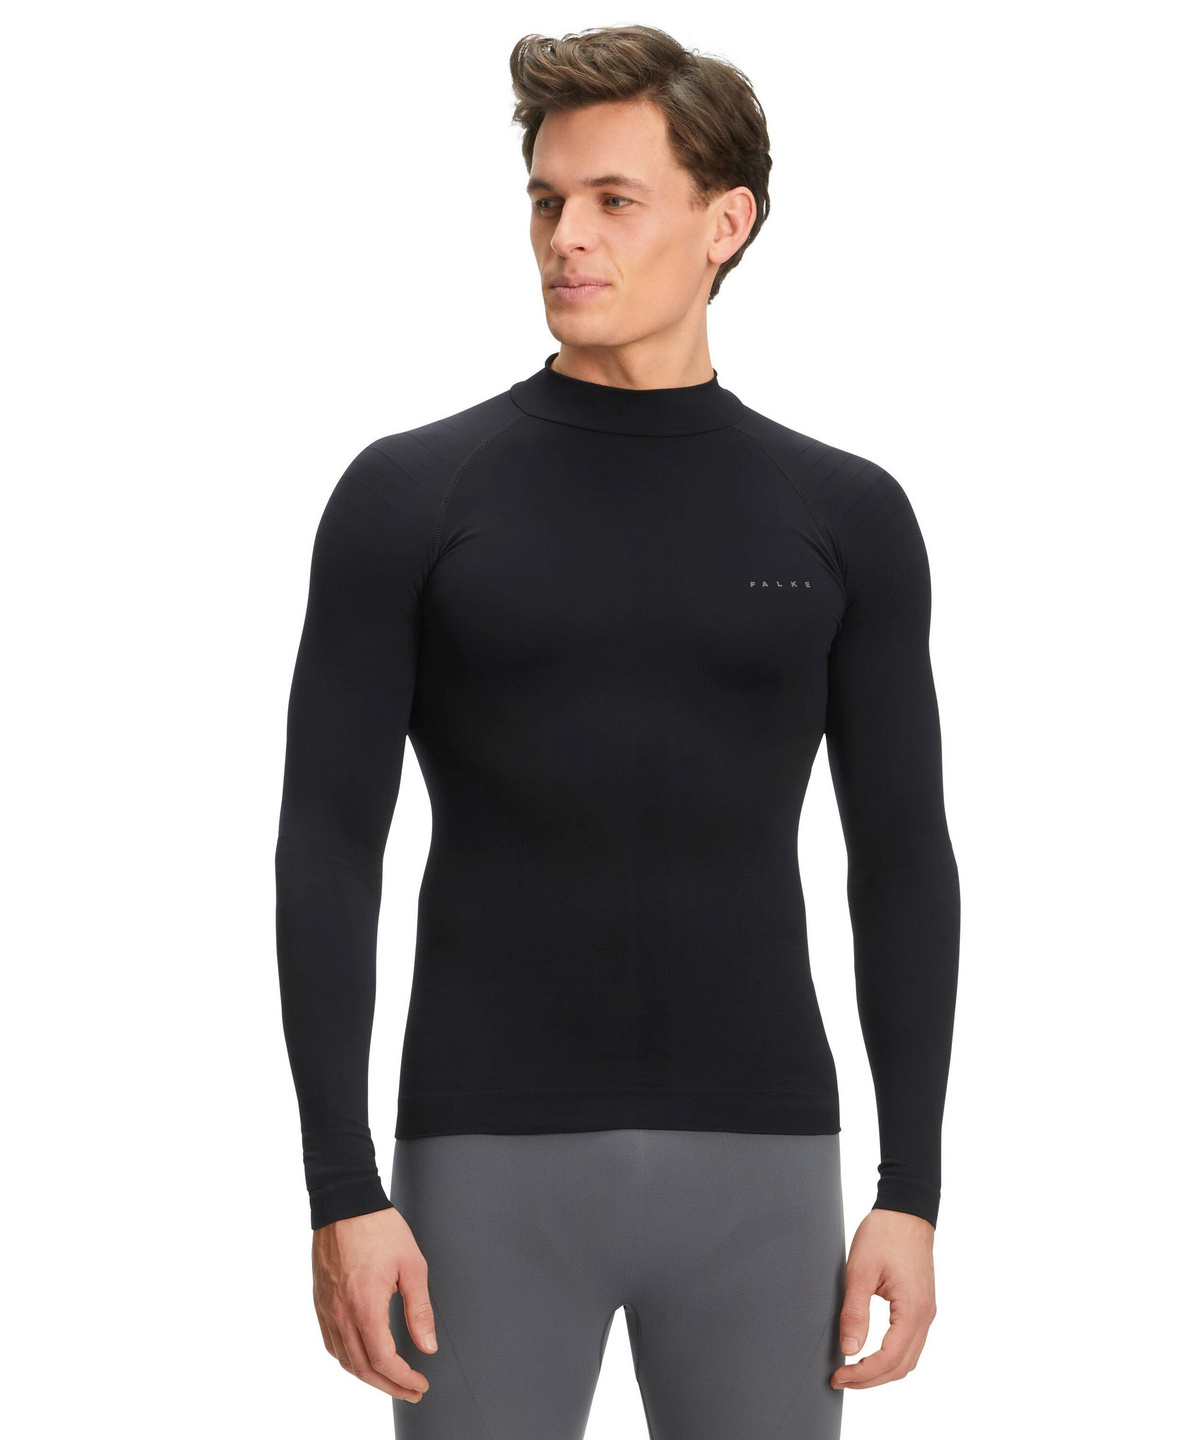 Black 3000 FALKE Men Warm Tight Fit Long Sleeve Shirt 1 Piece Black M Sports Performance Fabric 